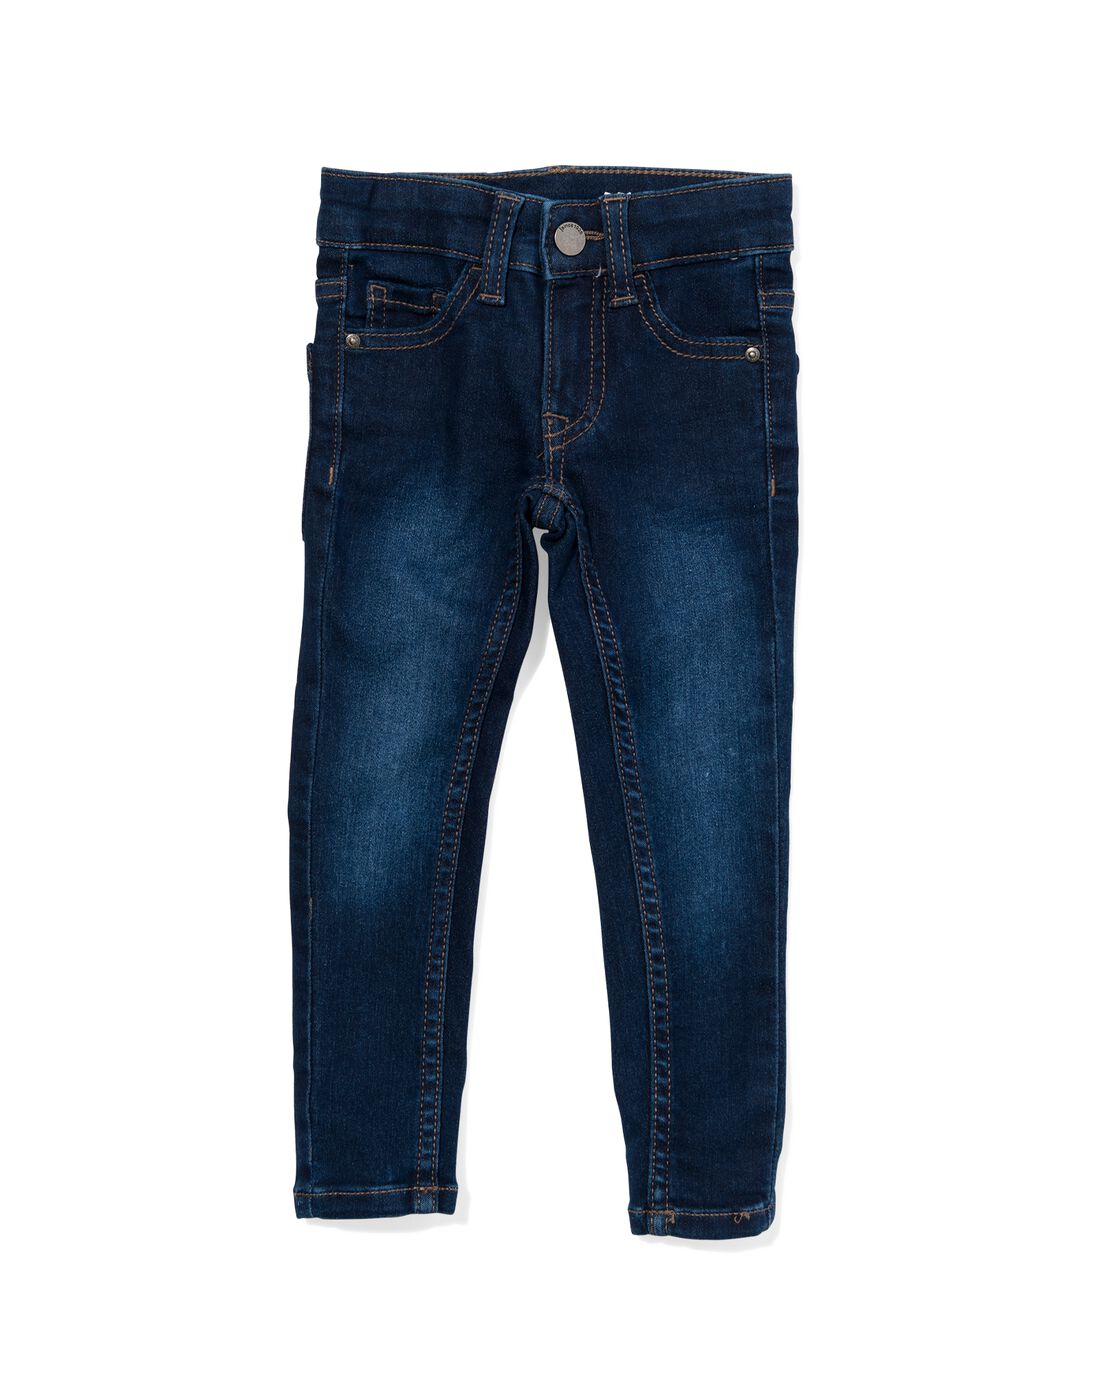 HEMA Kinder Jeans Skinny Fit Donkerblauw (donkerblauw)